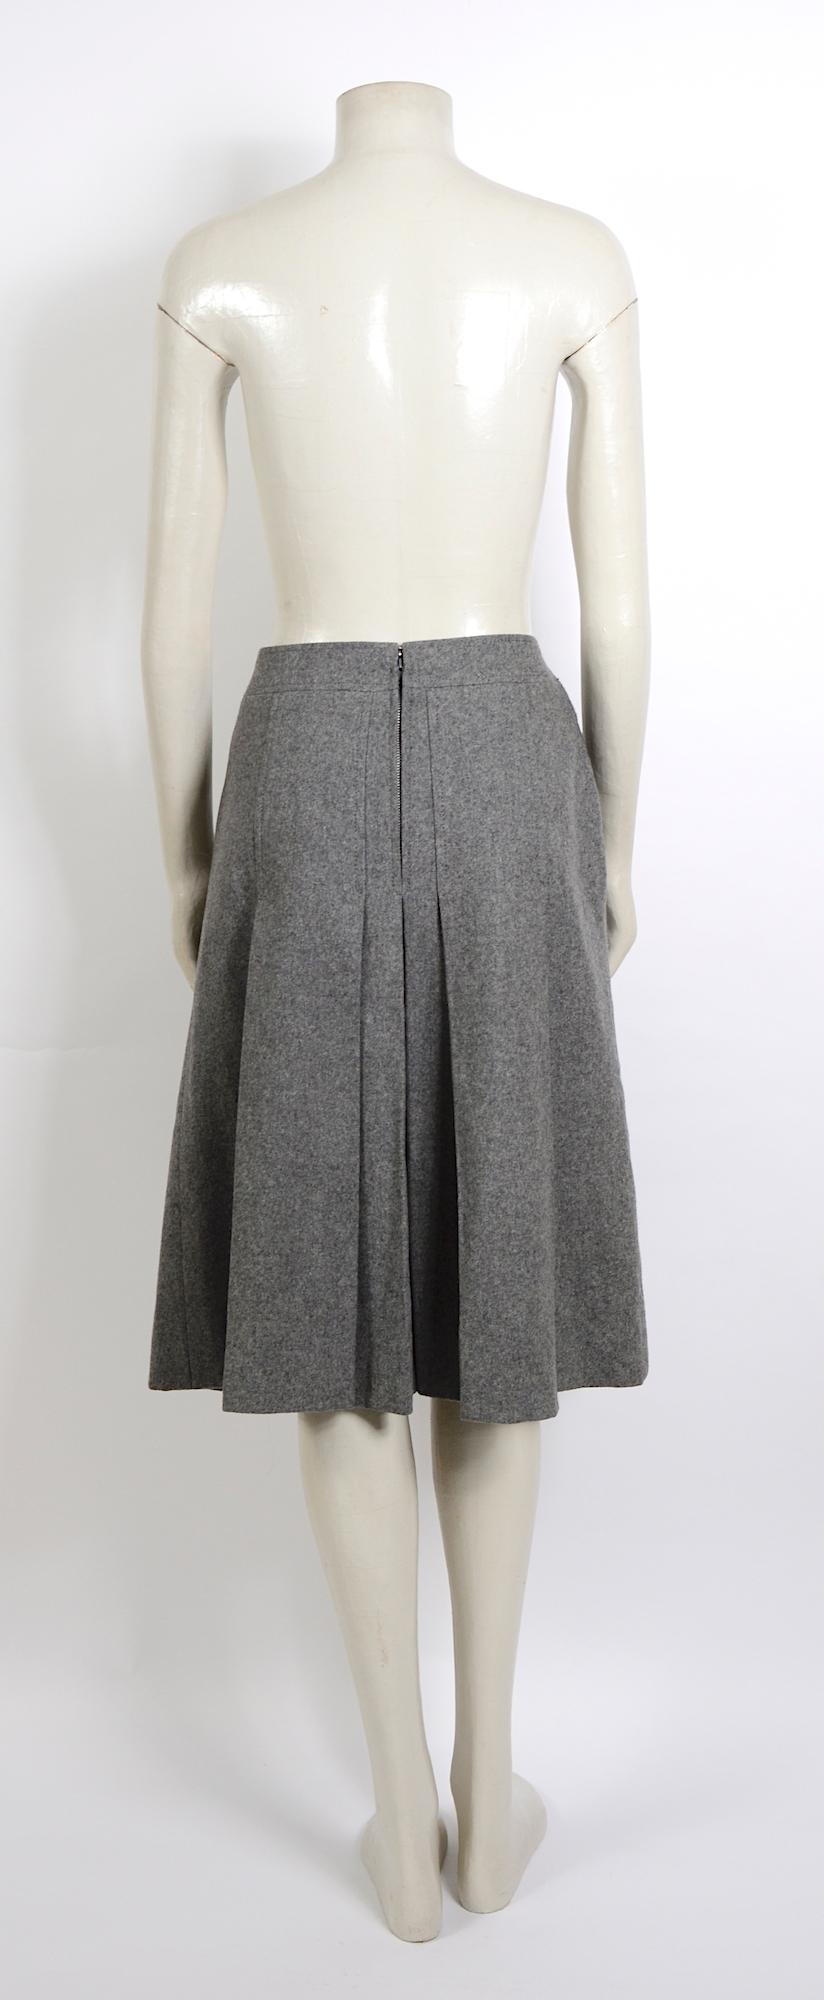 grey wool skirt